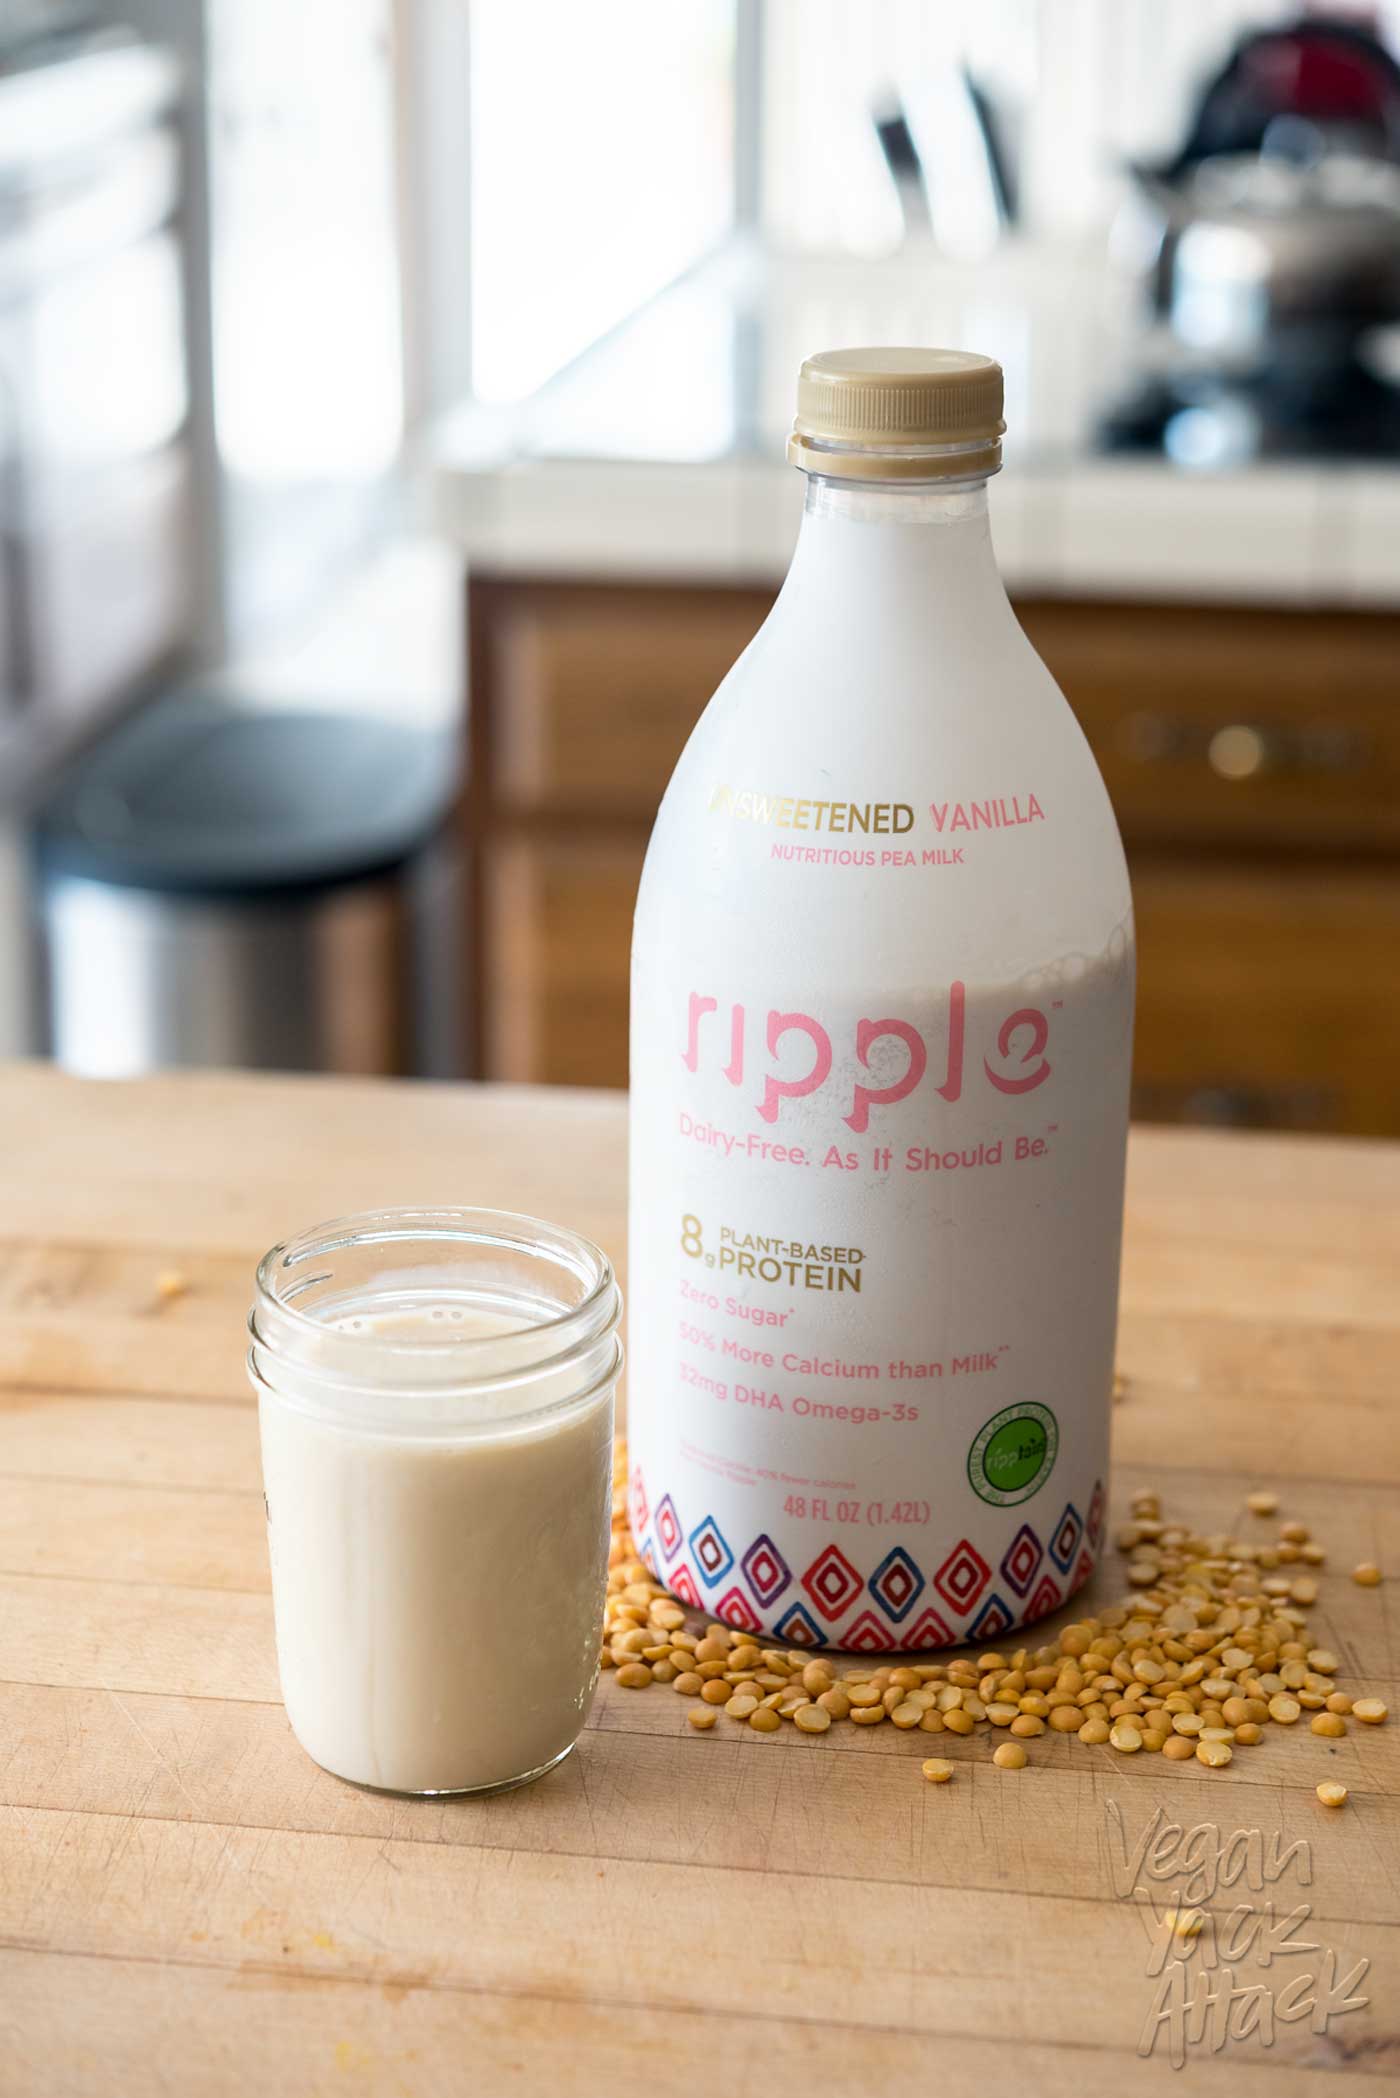 New Product Review! Unsweetened Vanilla Ripple Pea Milk - High in protein, zero sugar, and allergy-friendly! #vegan #soyfree #nutfree #ripplefoods #dairyfreedom